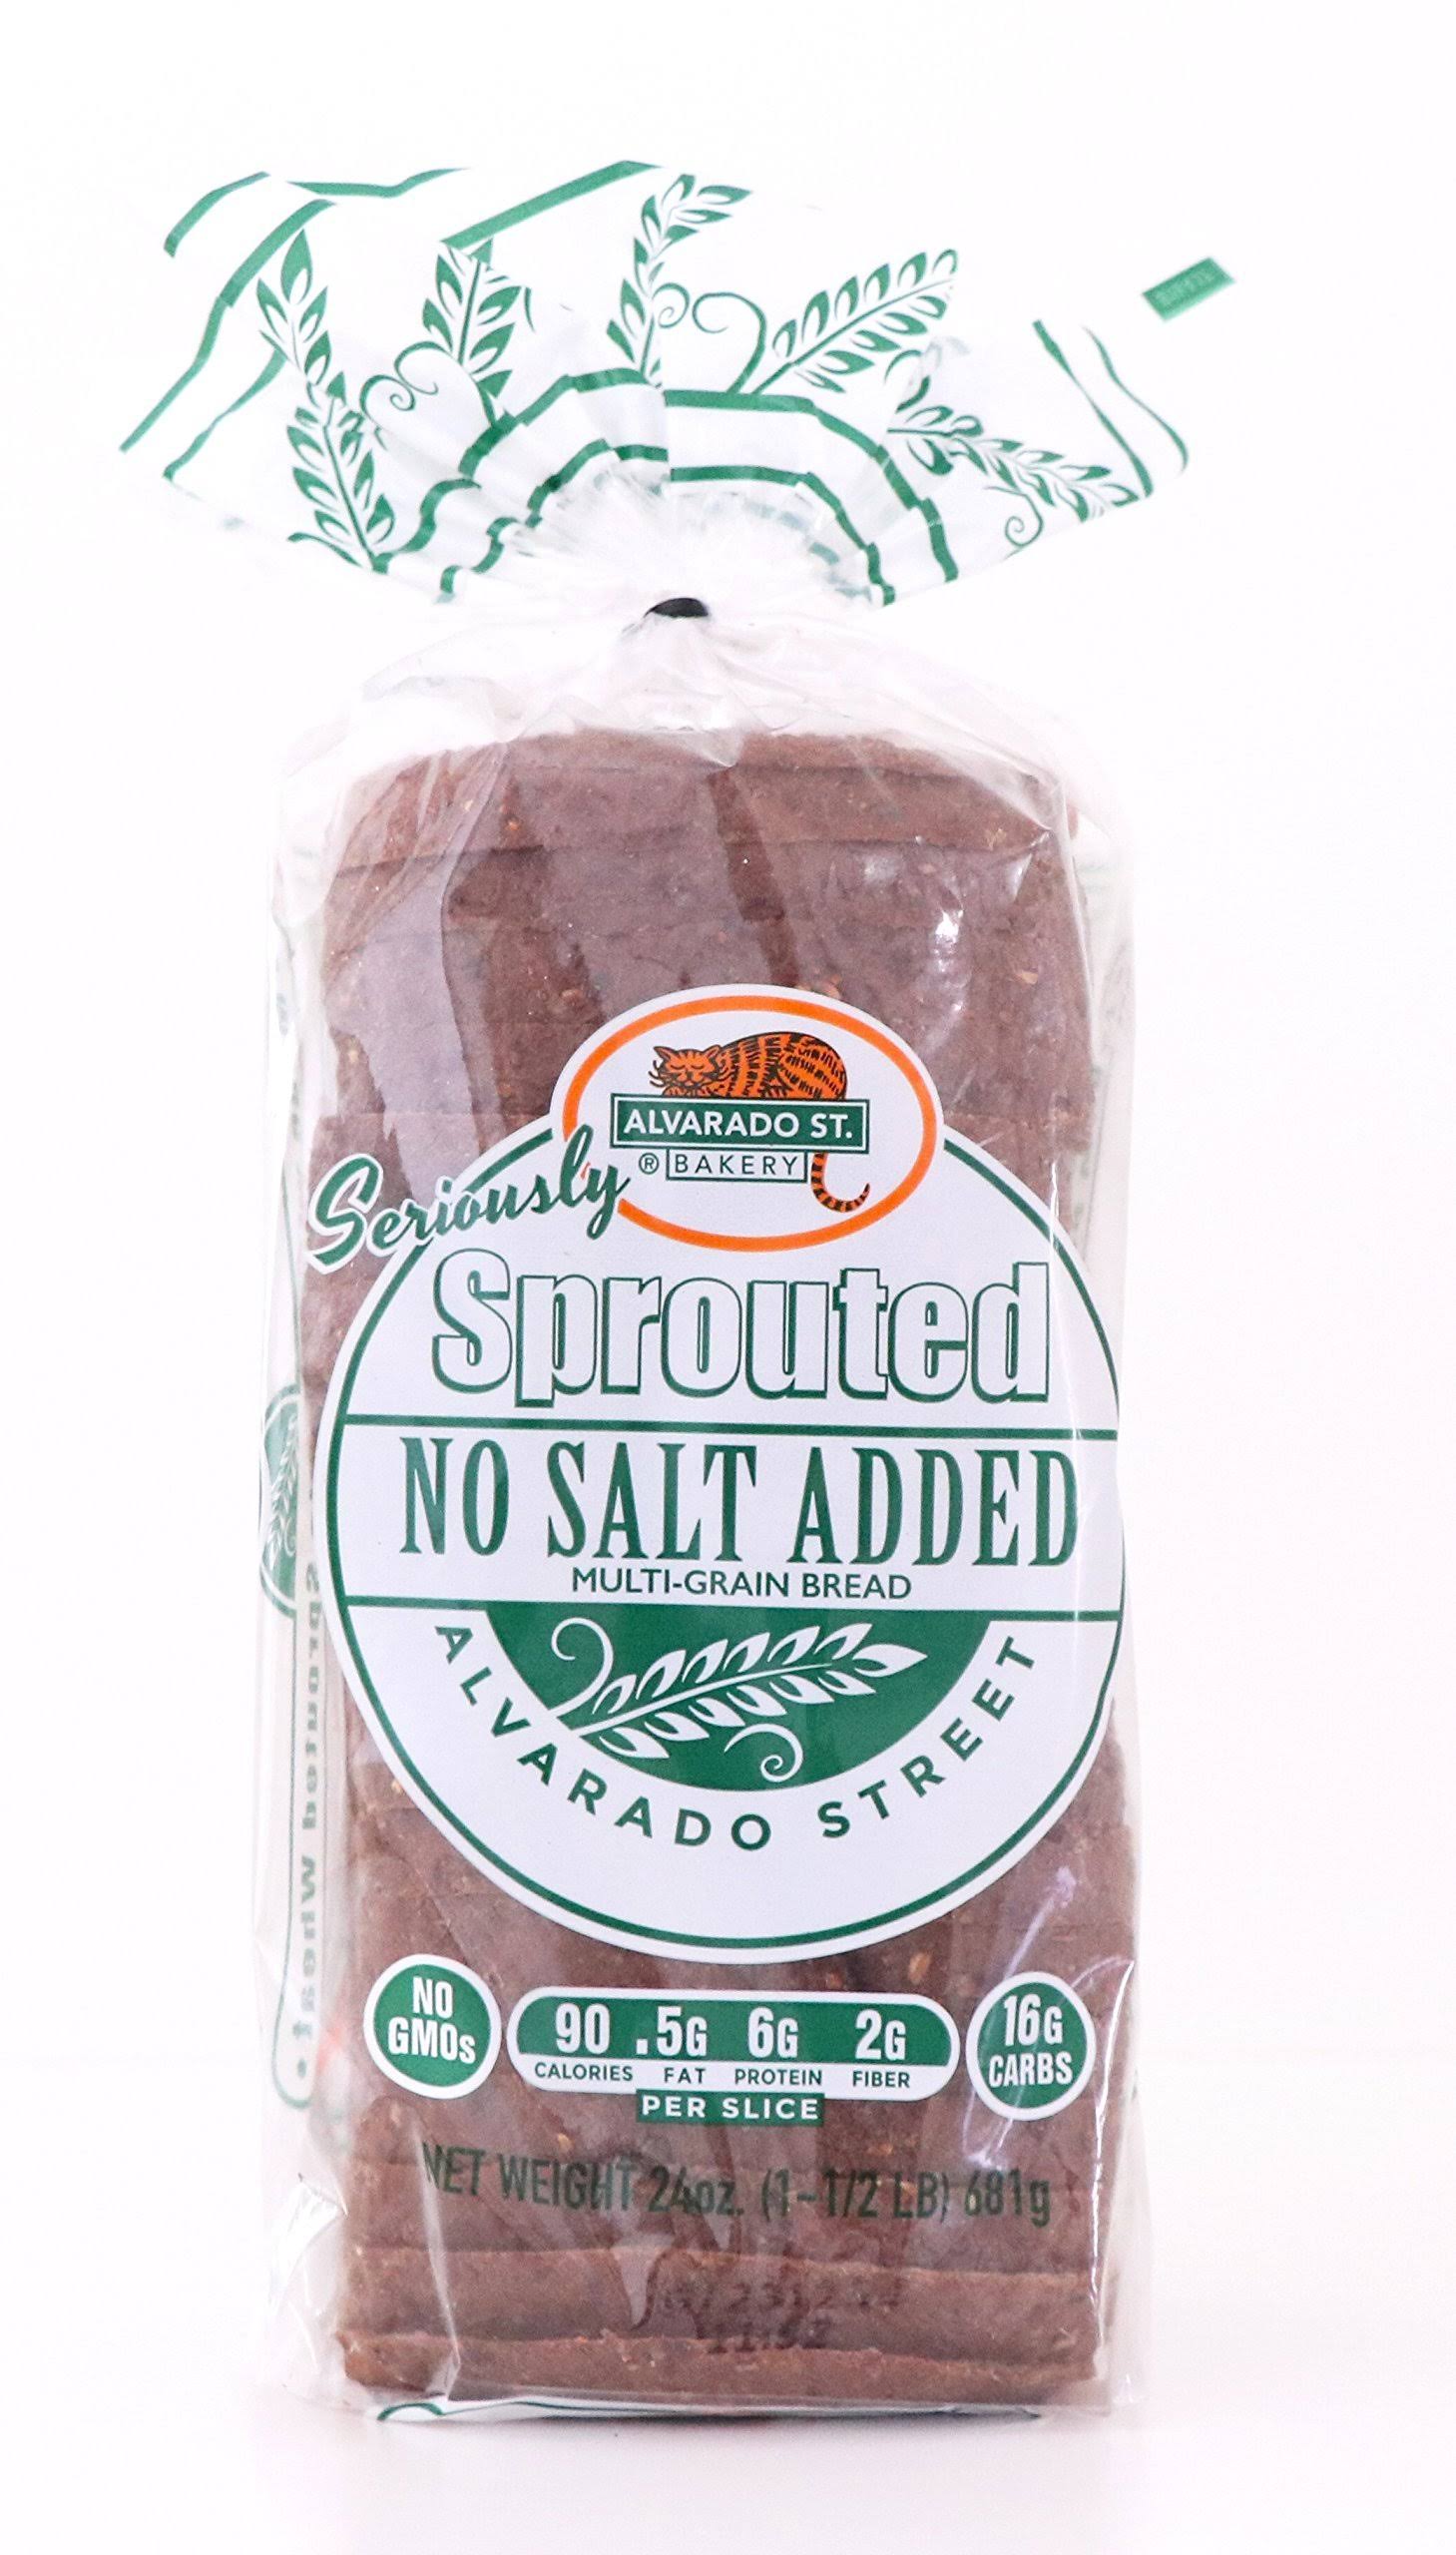 Alvarado St Bakery Organic Sprouted Sourdough Bread - 24oz